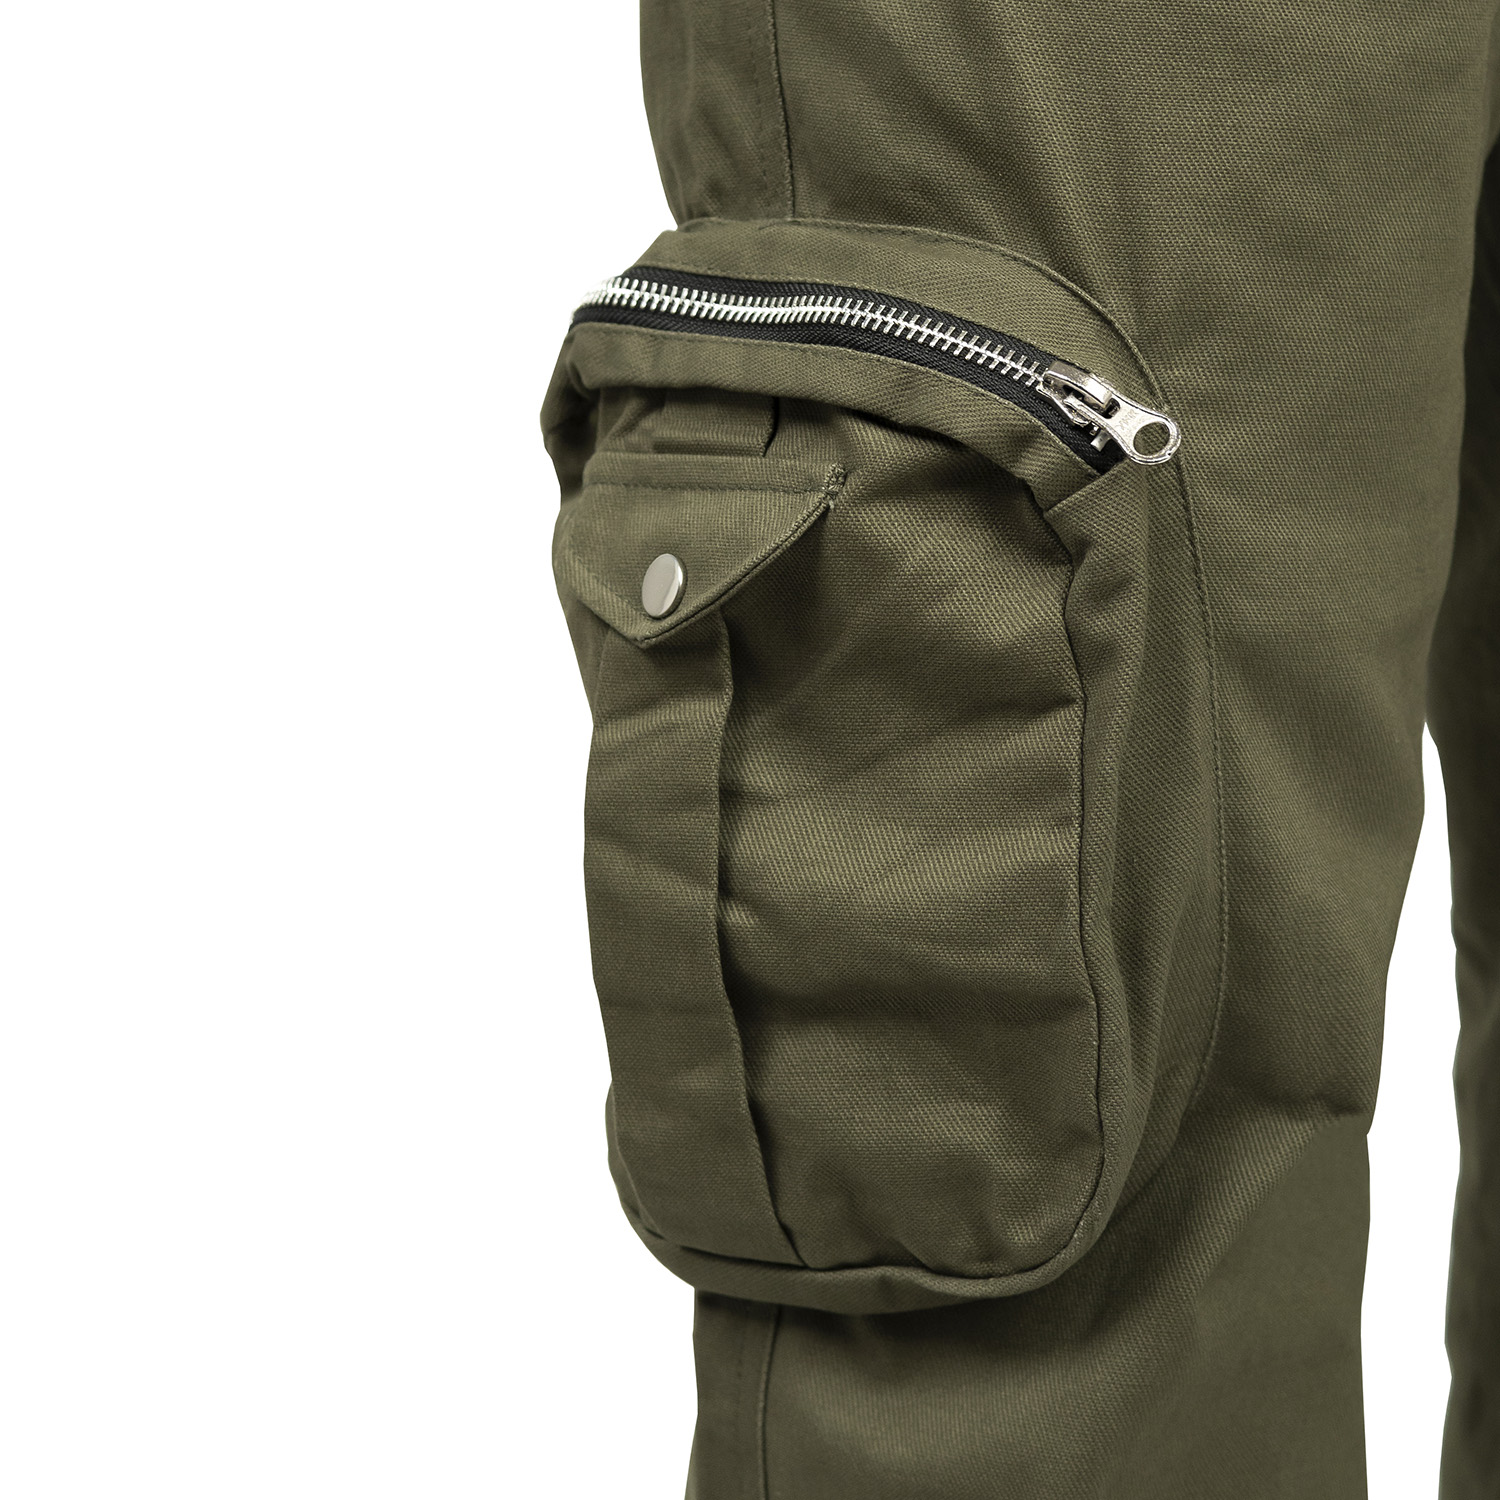 Buy t-base Men's Military Olive Solid Cargo Pants for Men Online India